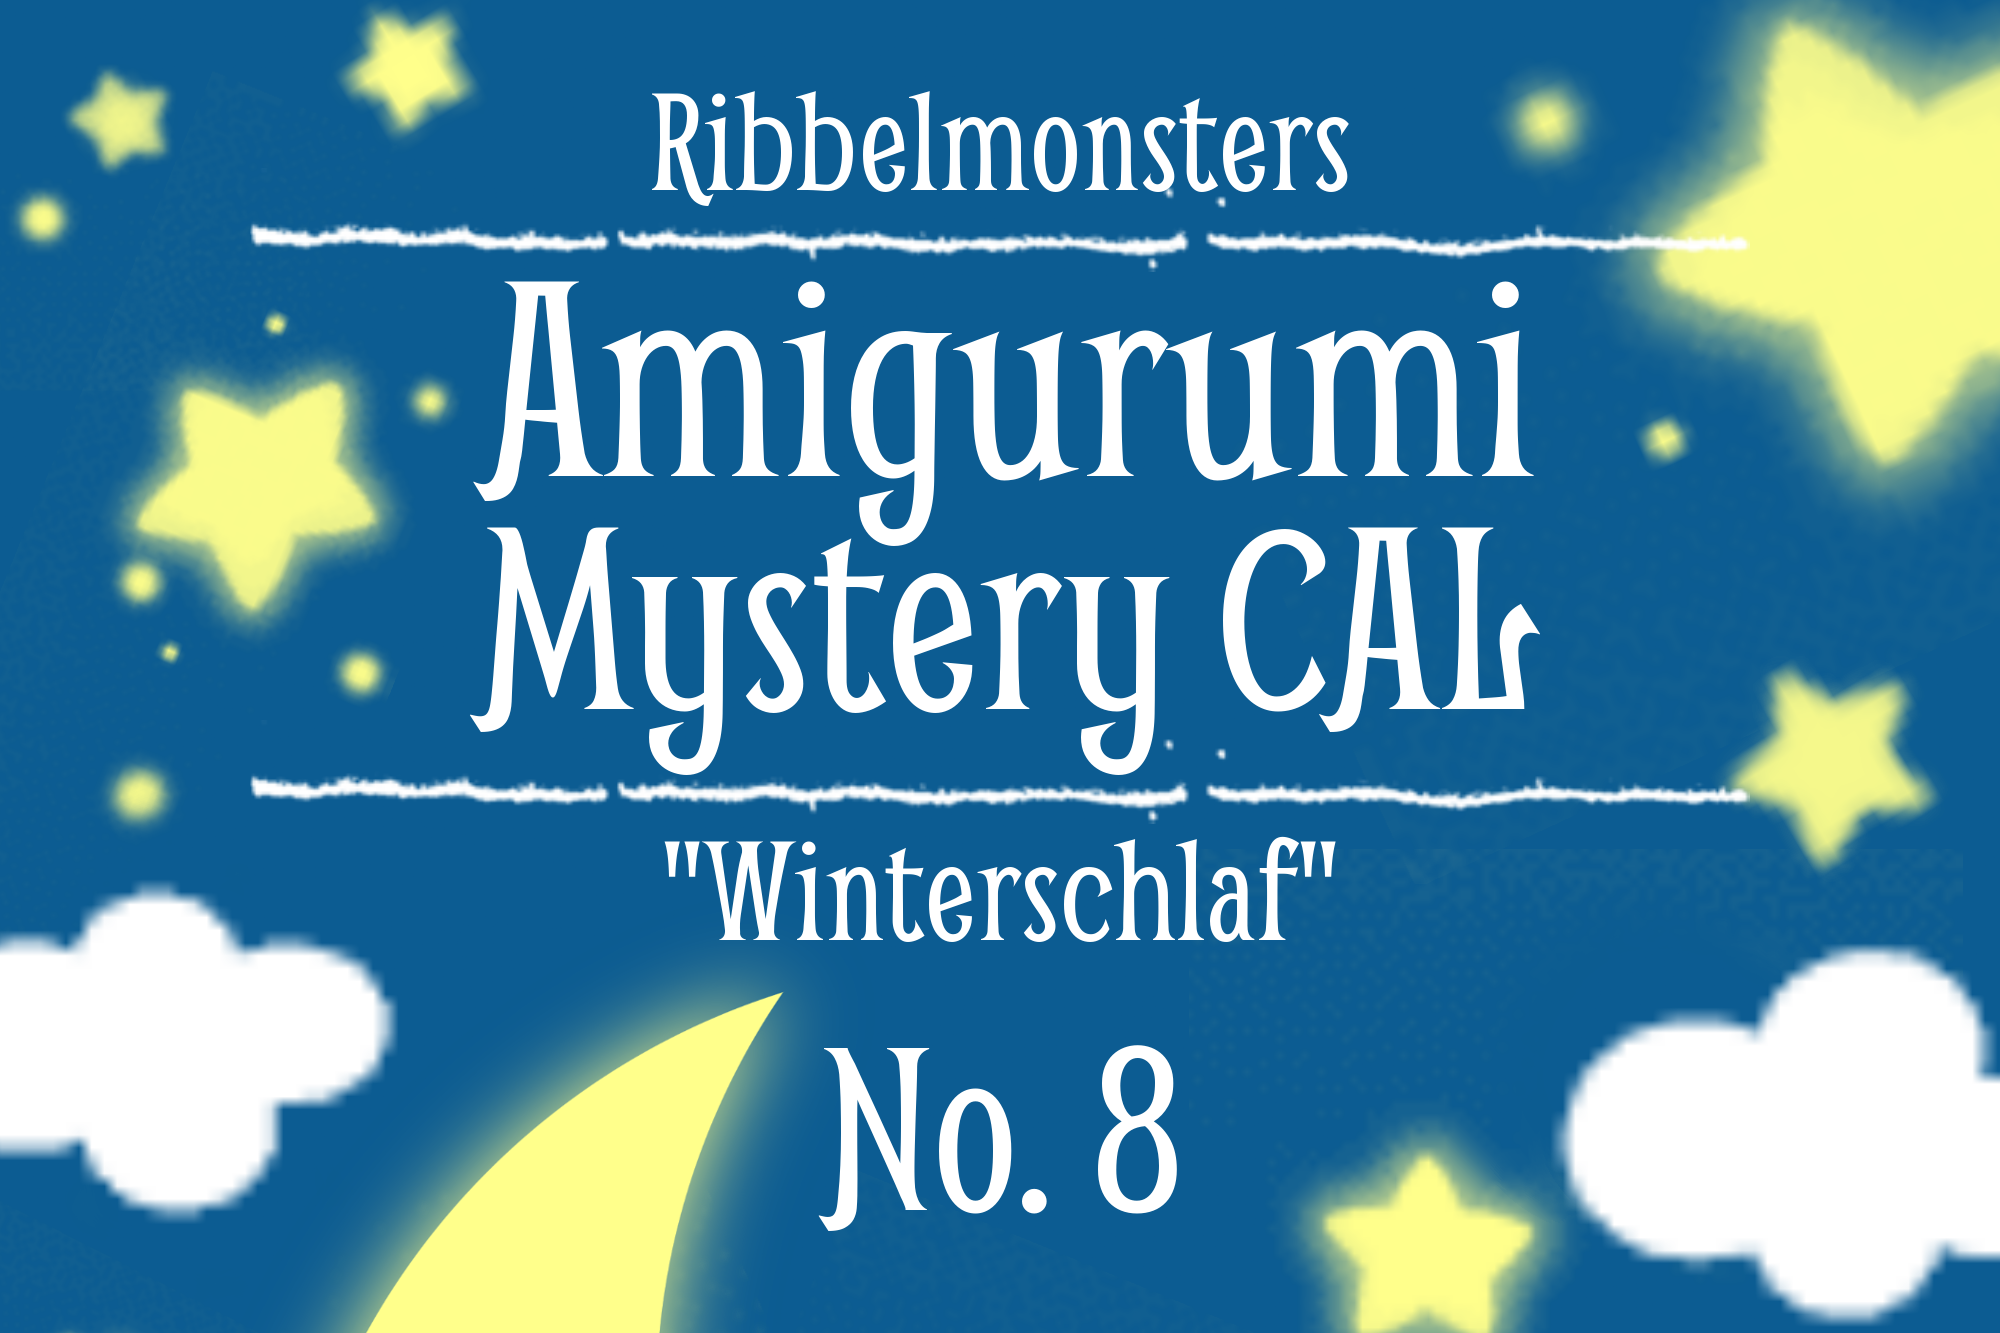 Amigurumi Mystery CAL – “Hybernation” – Part 8